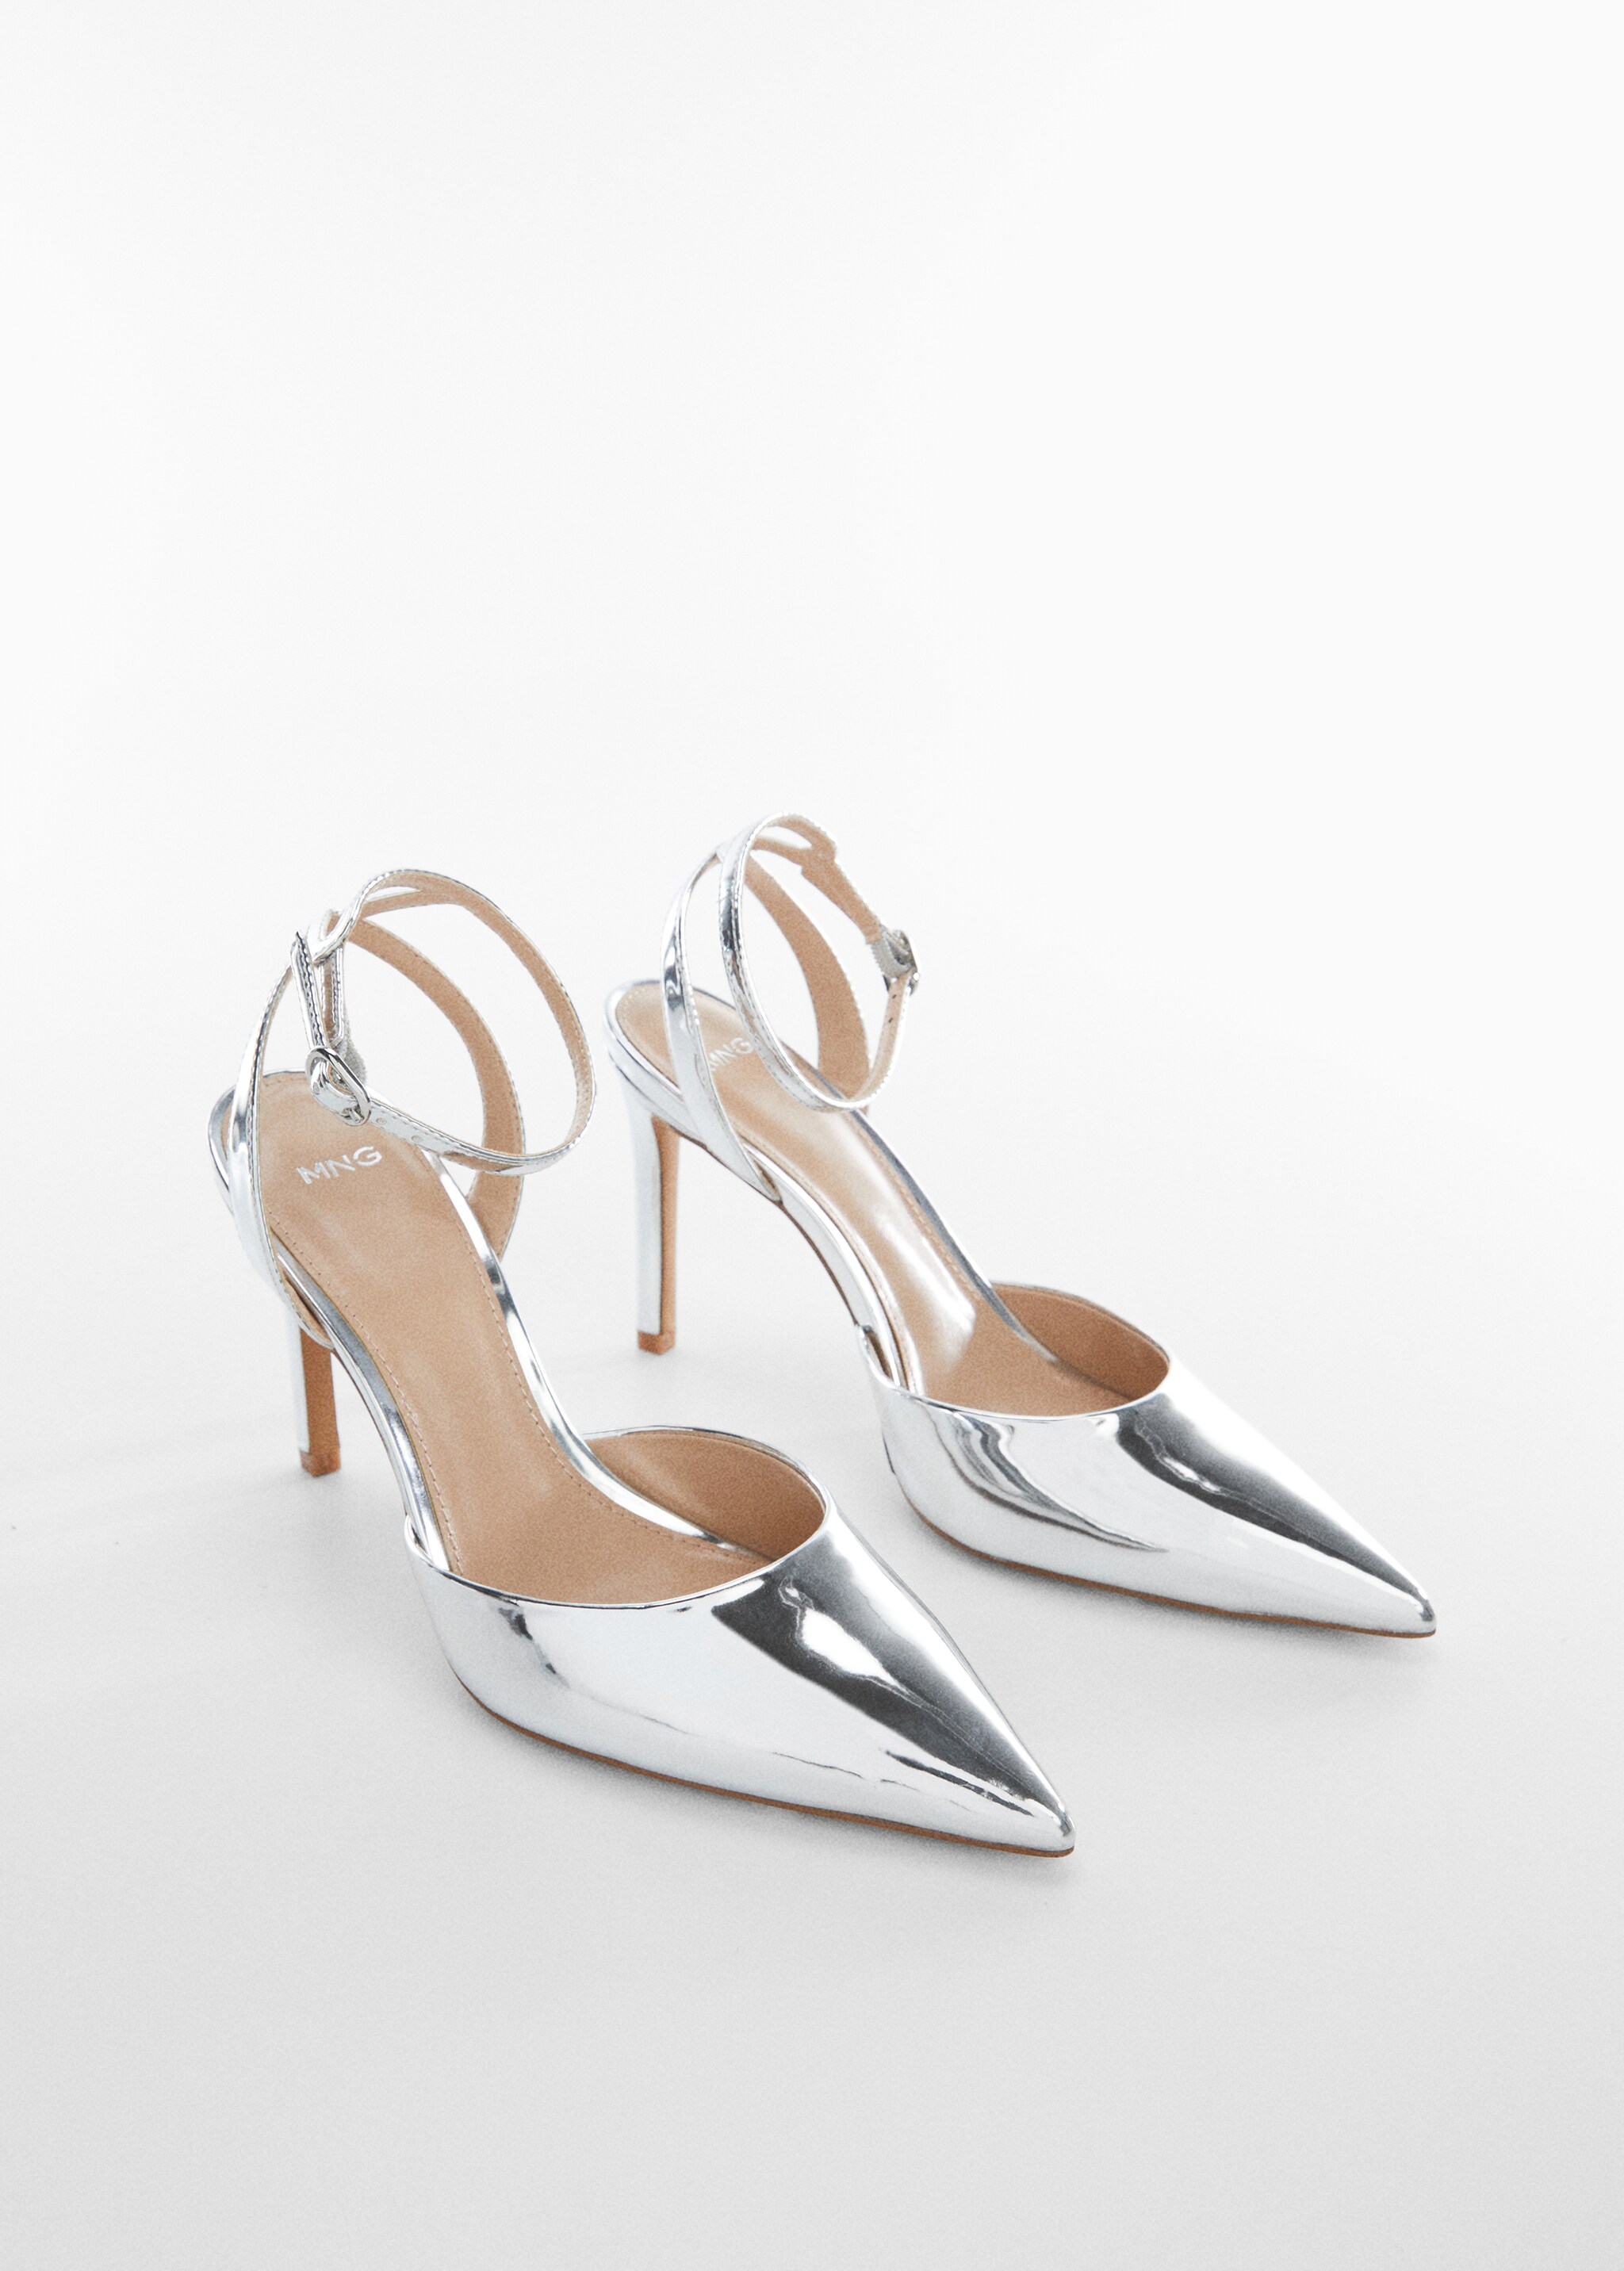 Metallic heel shoes - Medium plane